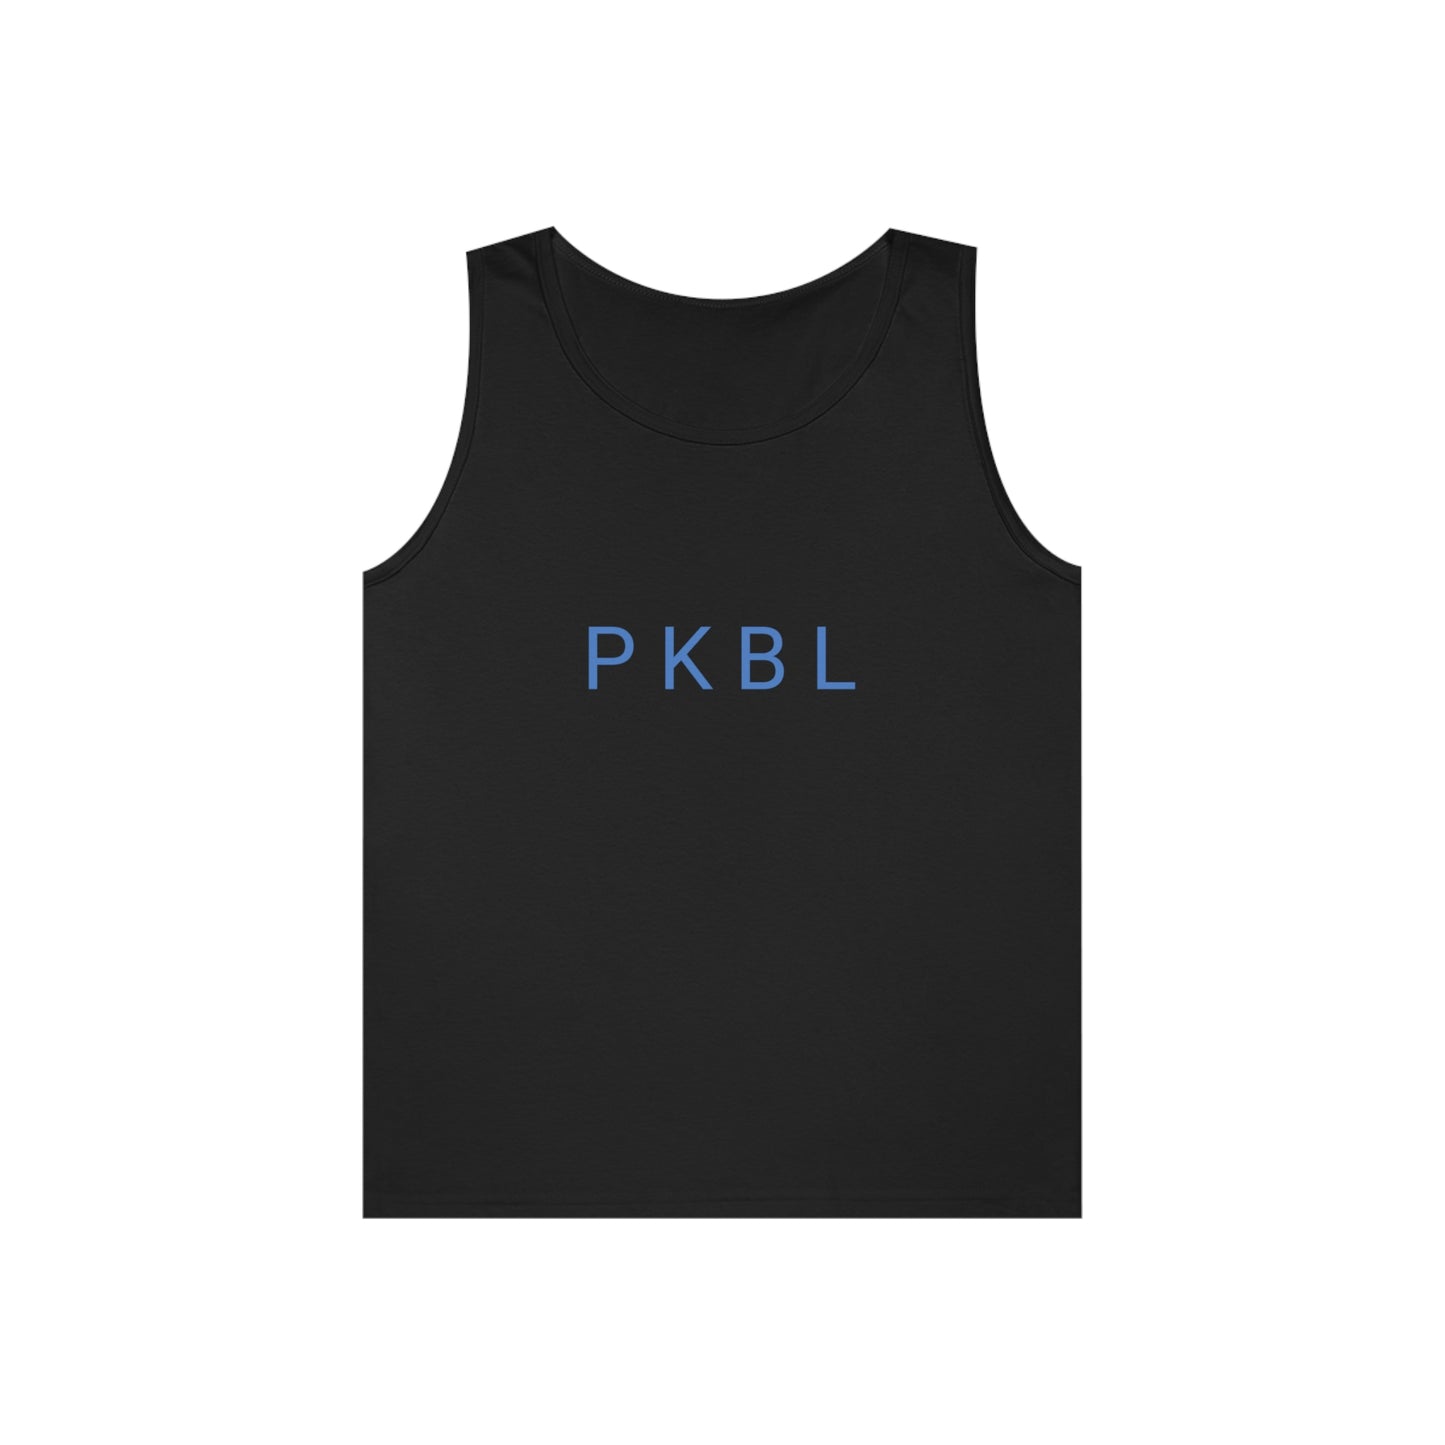 PKBL Pickleball Unisex Cotton Tank Top